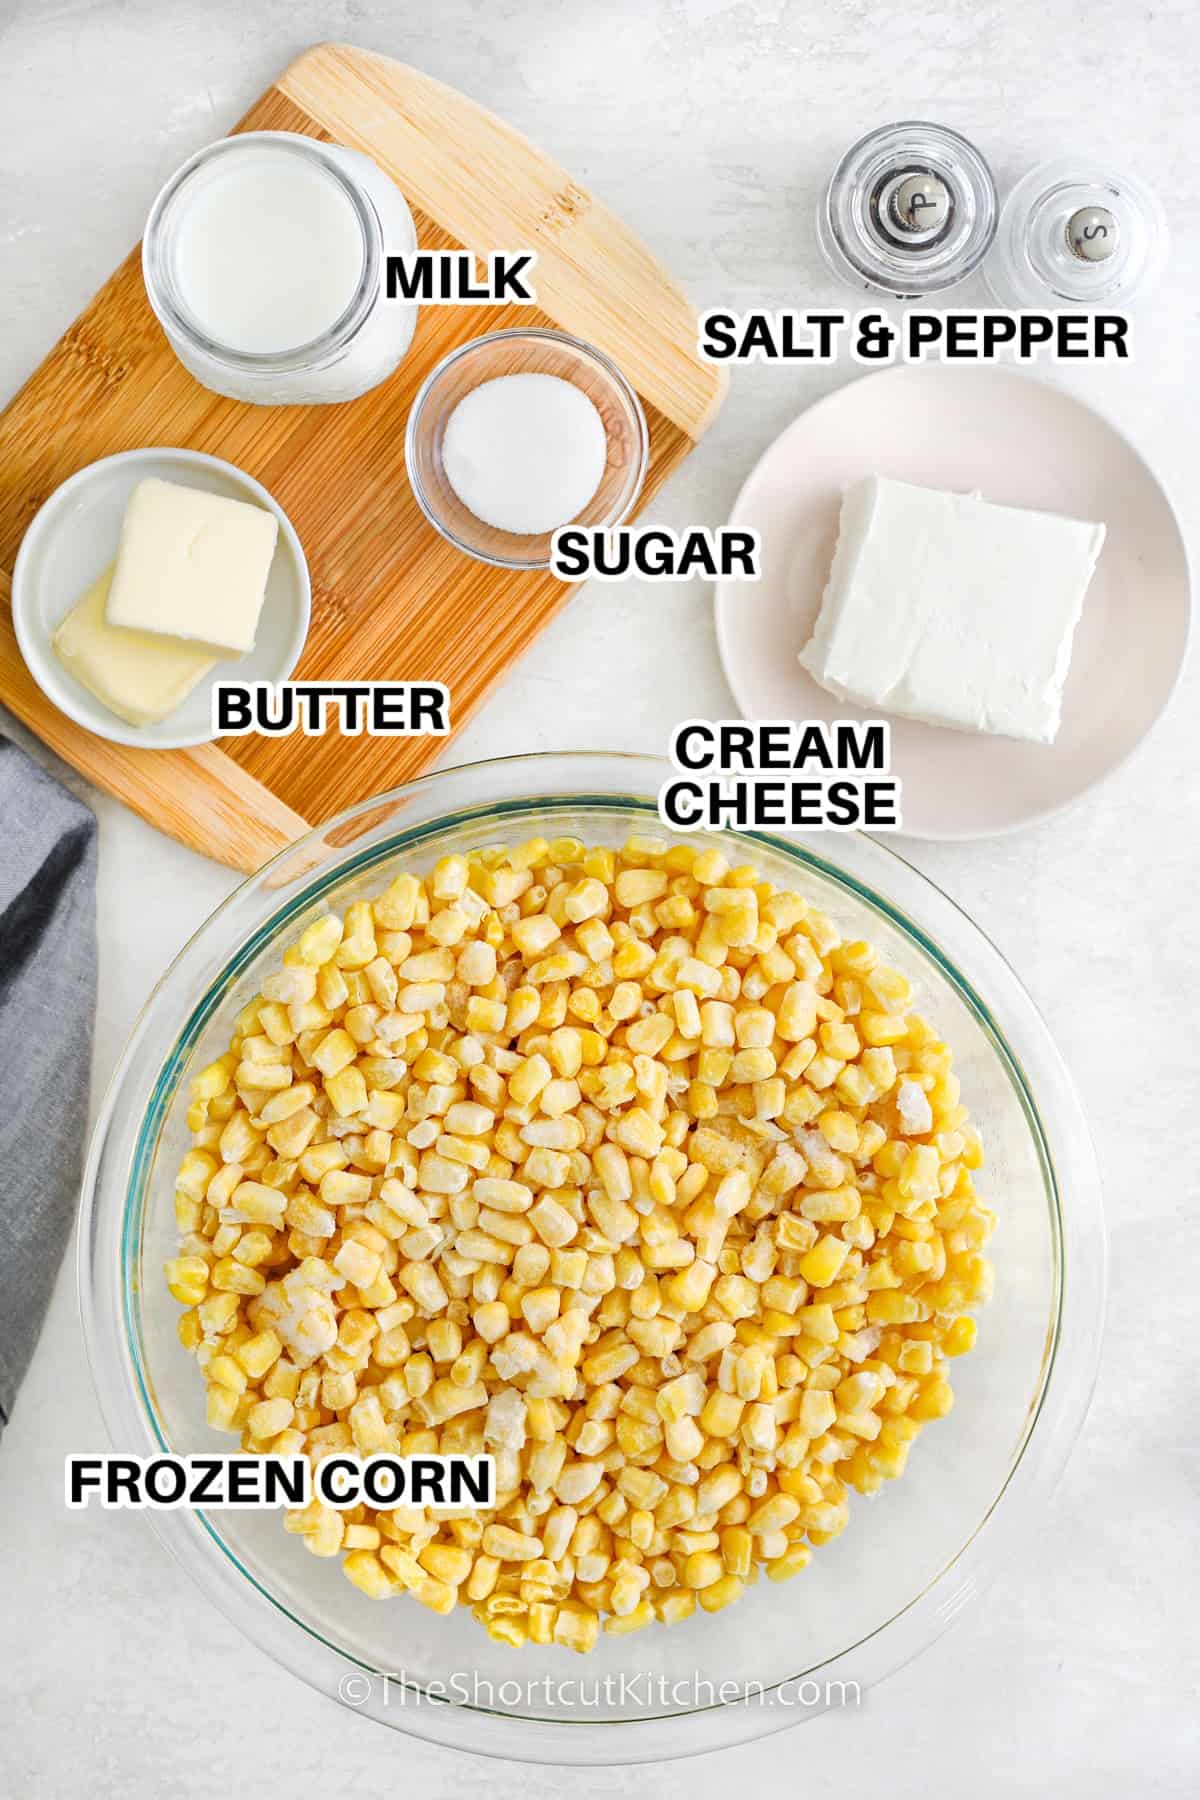 Ingredients to make crockpot creamed corn labeled: milk, sugar, butter, cream cheese, salt, pepper, and frozen corn